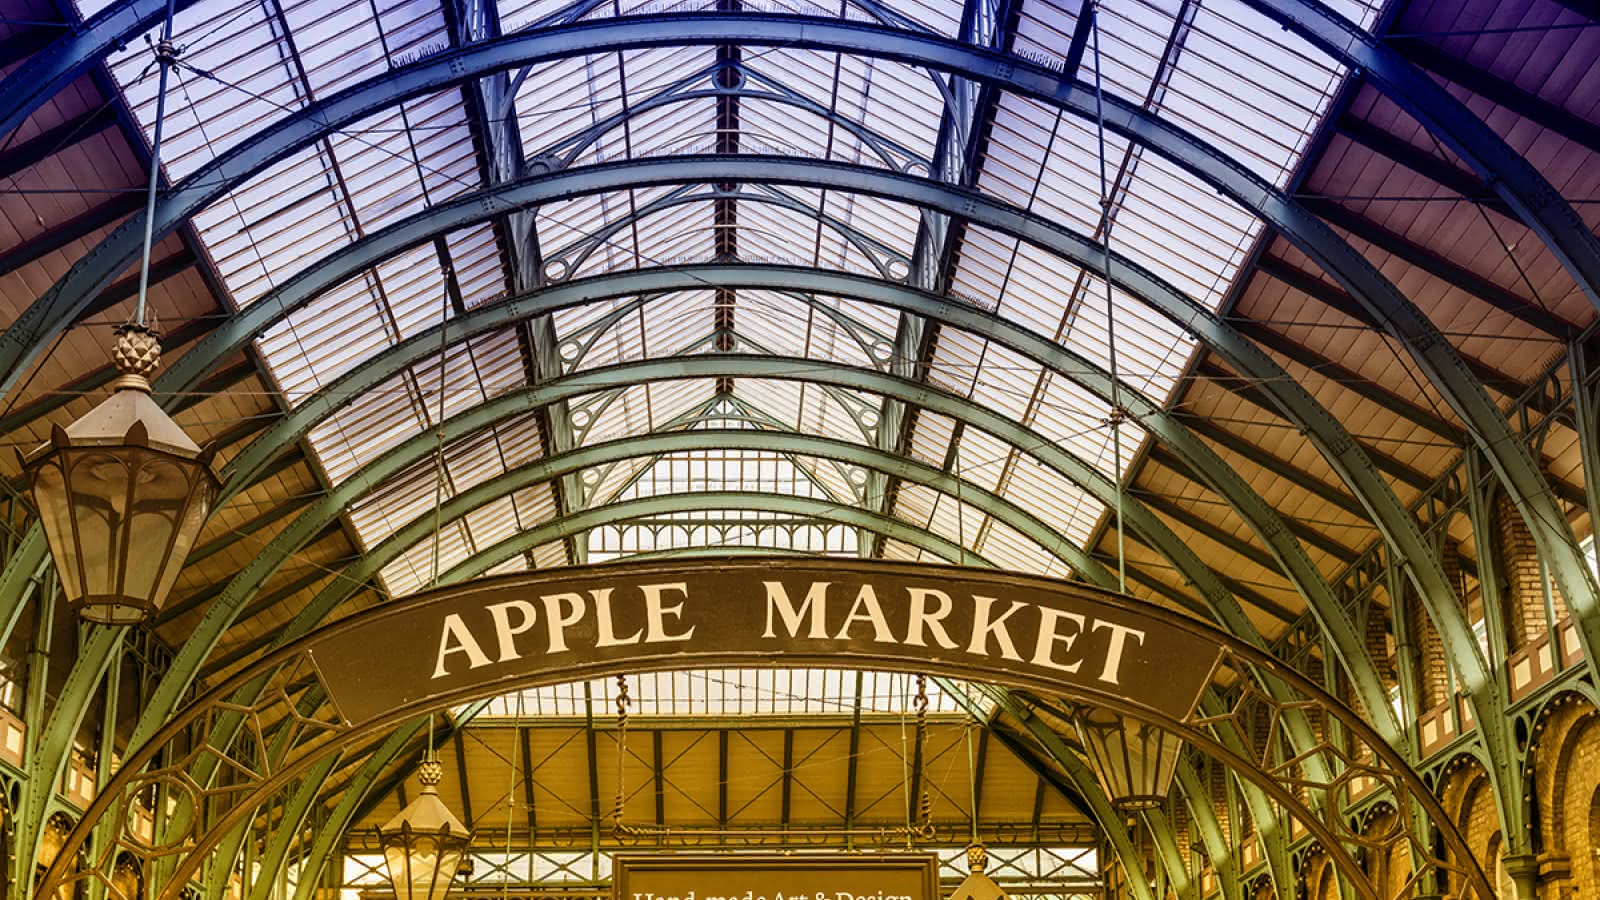 London Apple Market